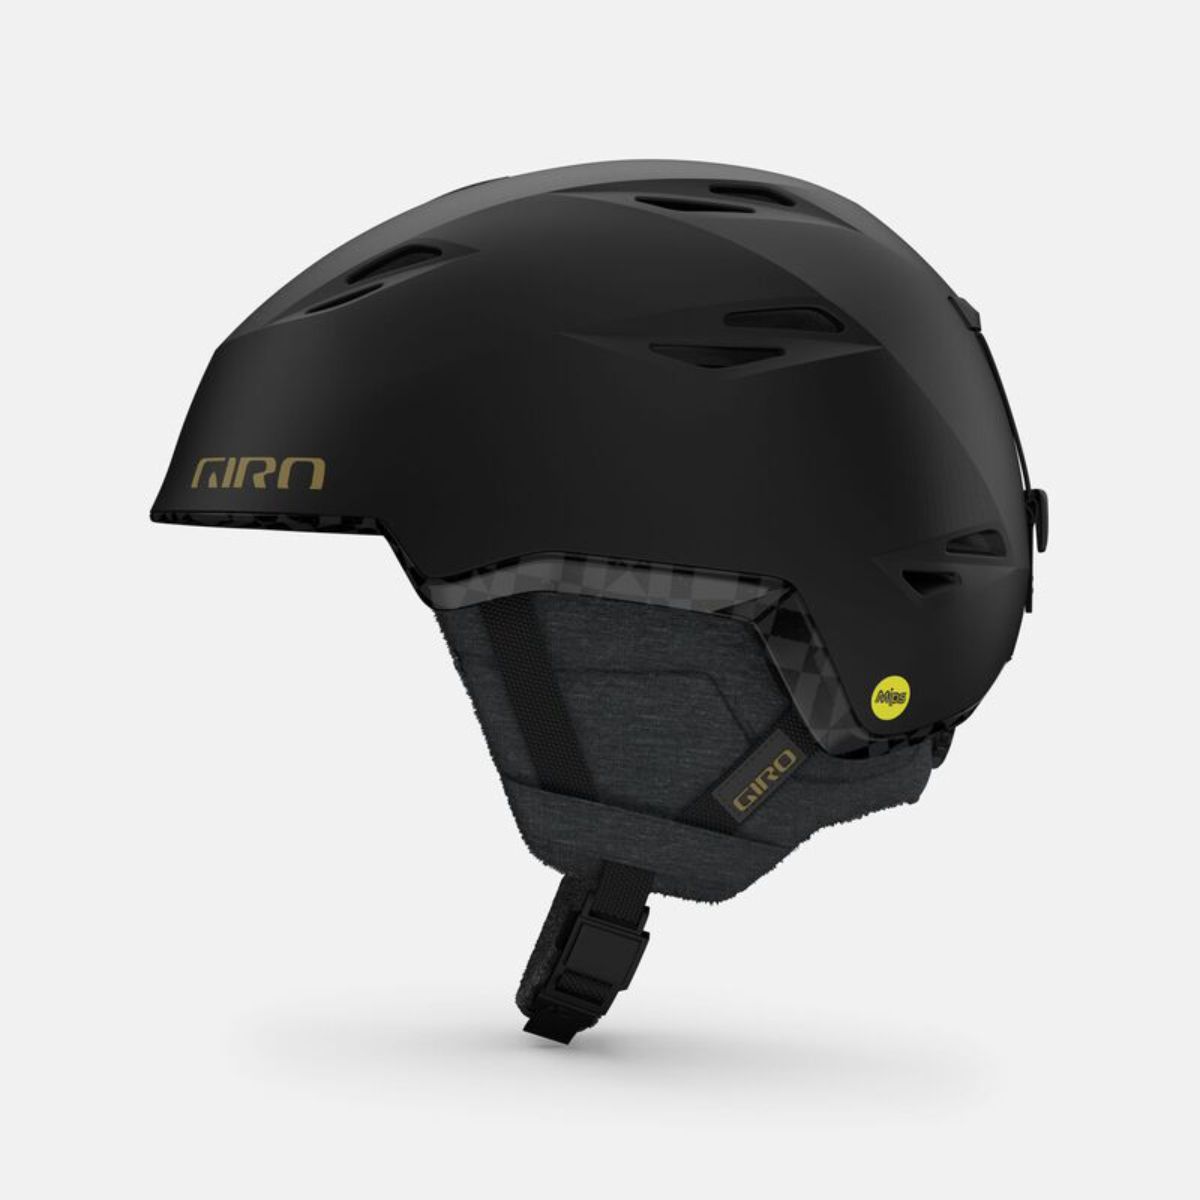 Apex ski /bike helmet A10 size medium red/black/silver 